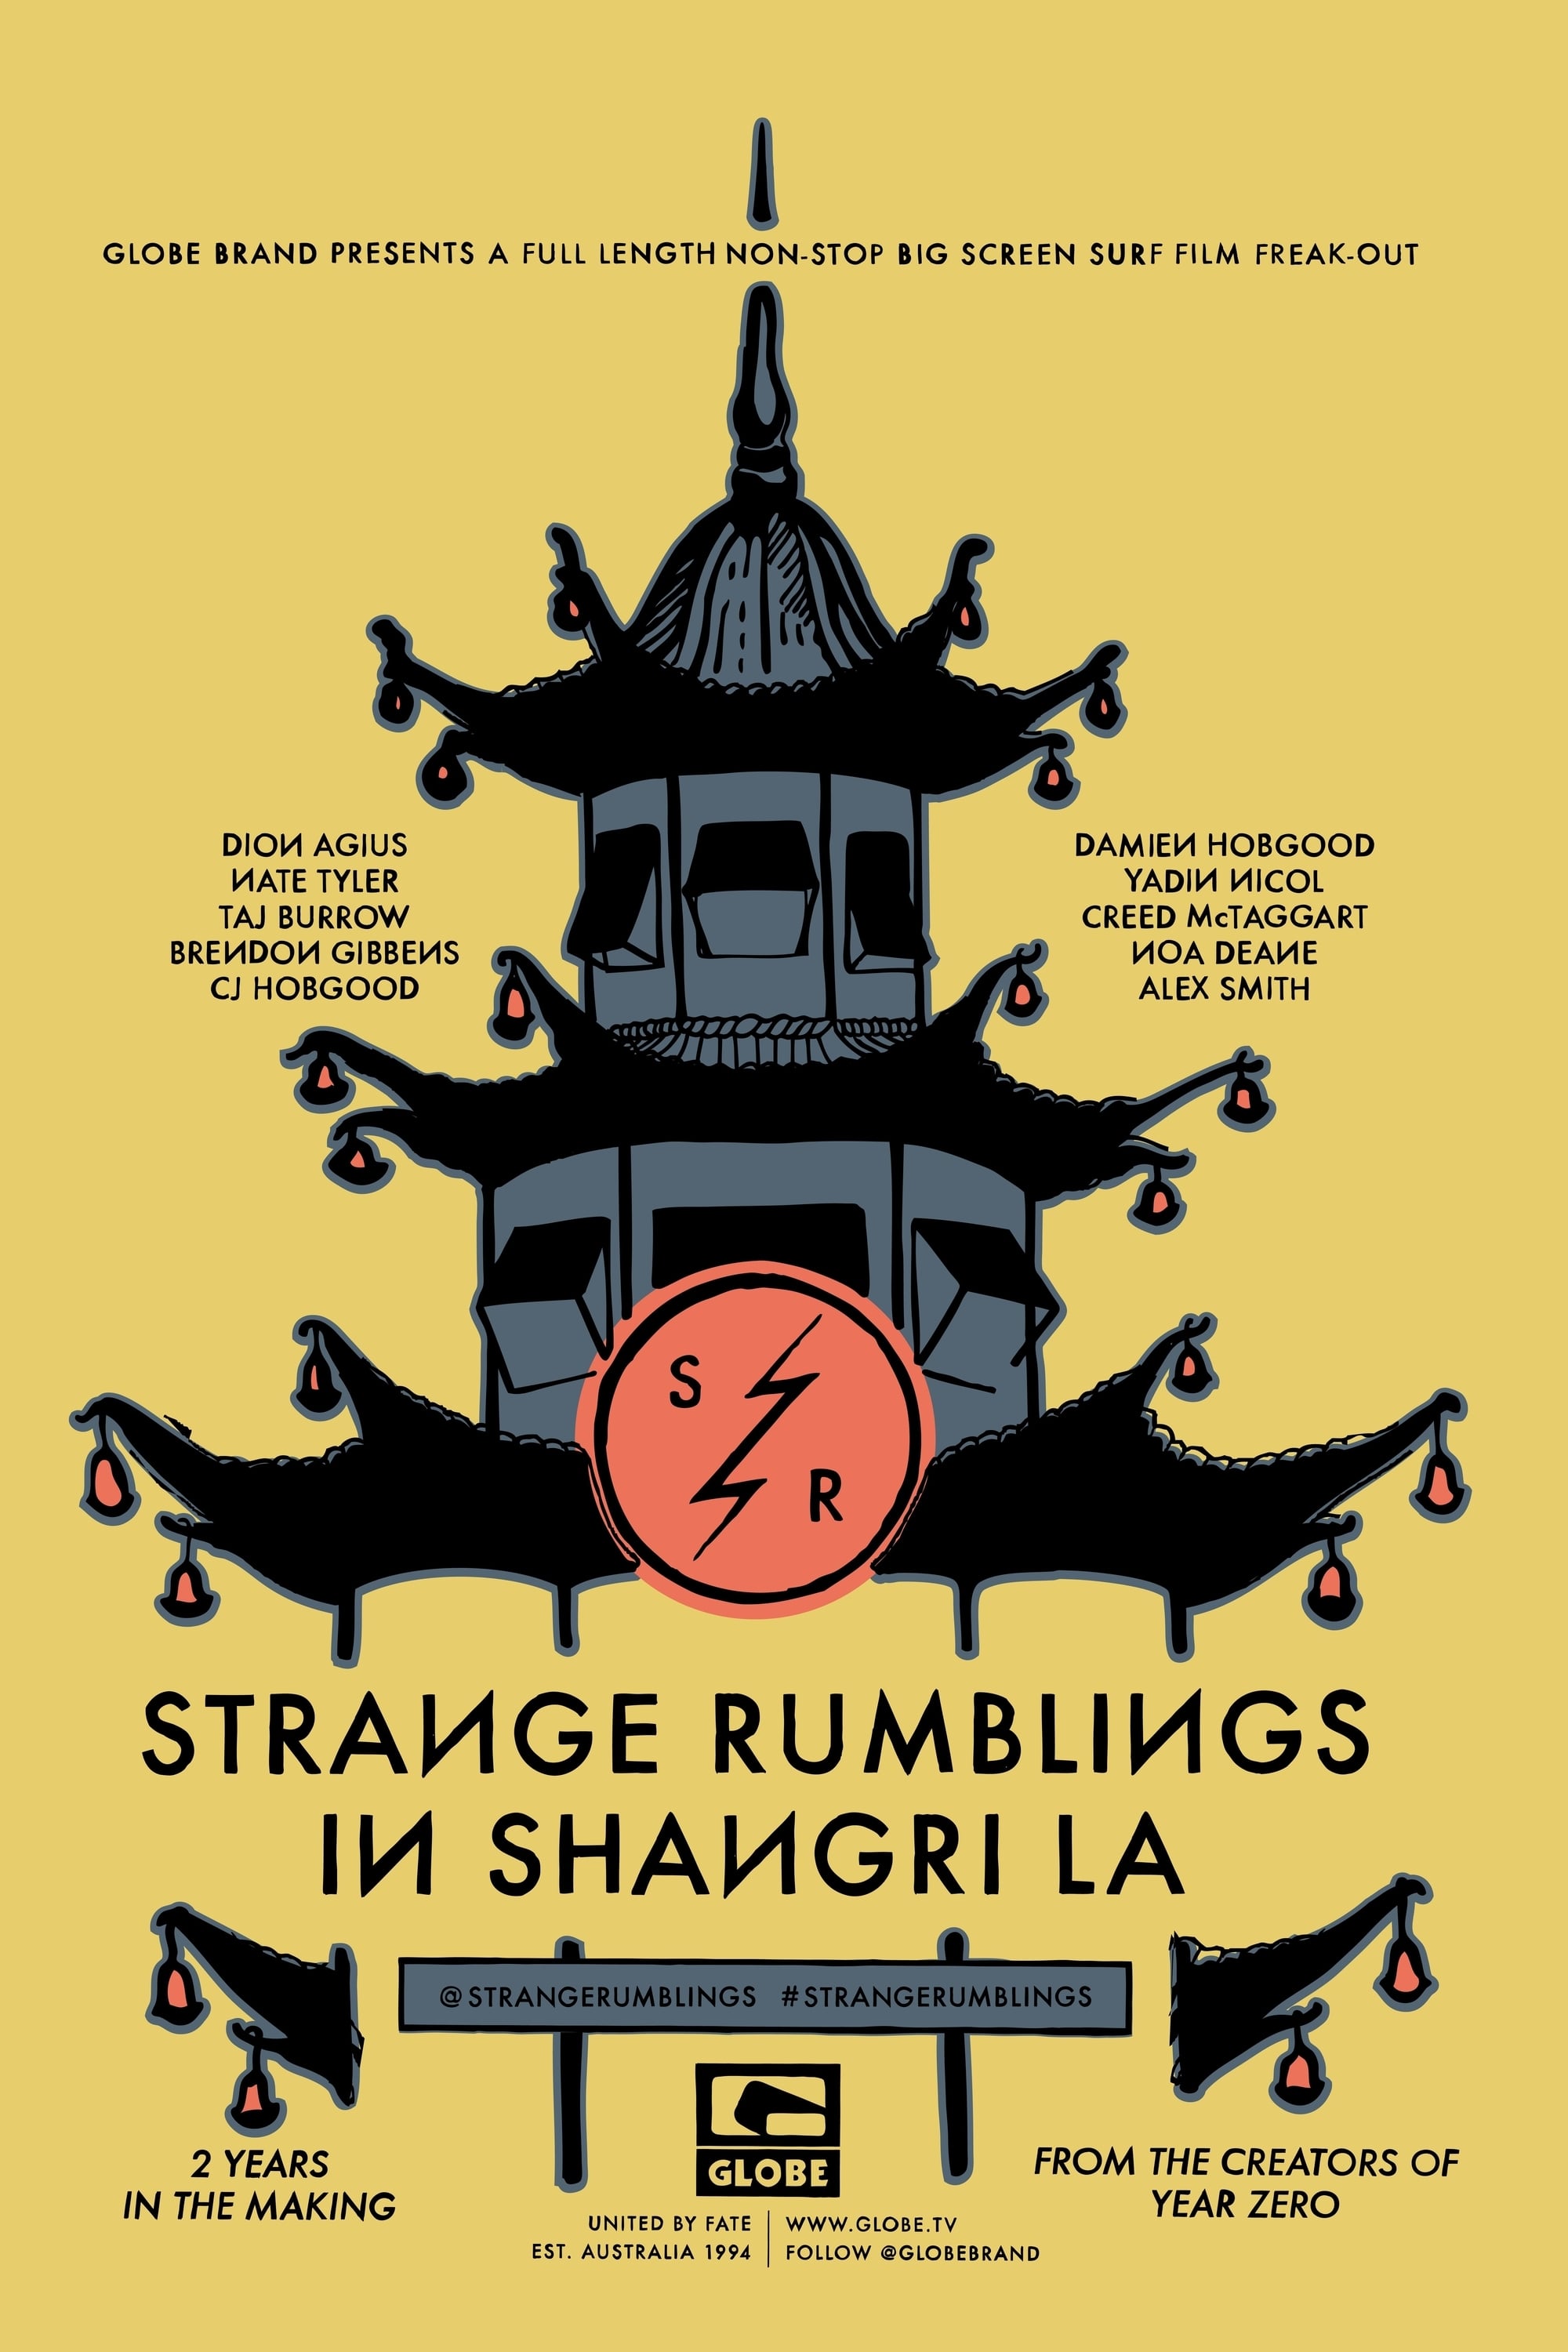 Strange Rumblings In Shangri La